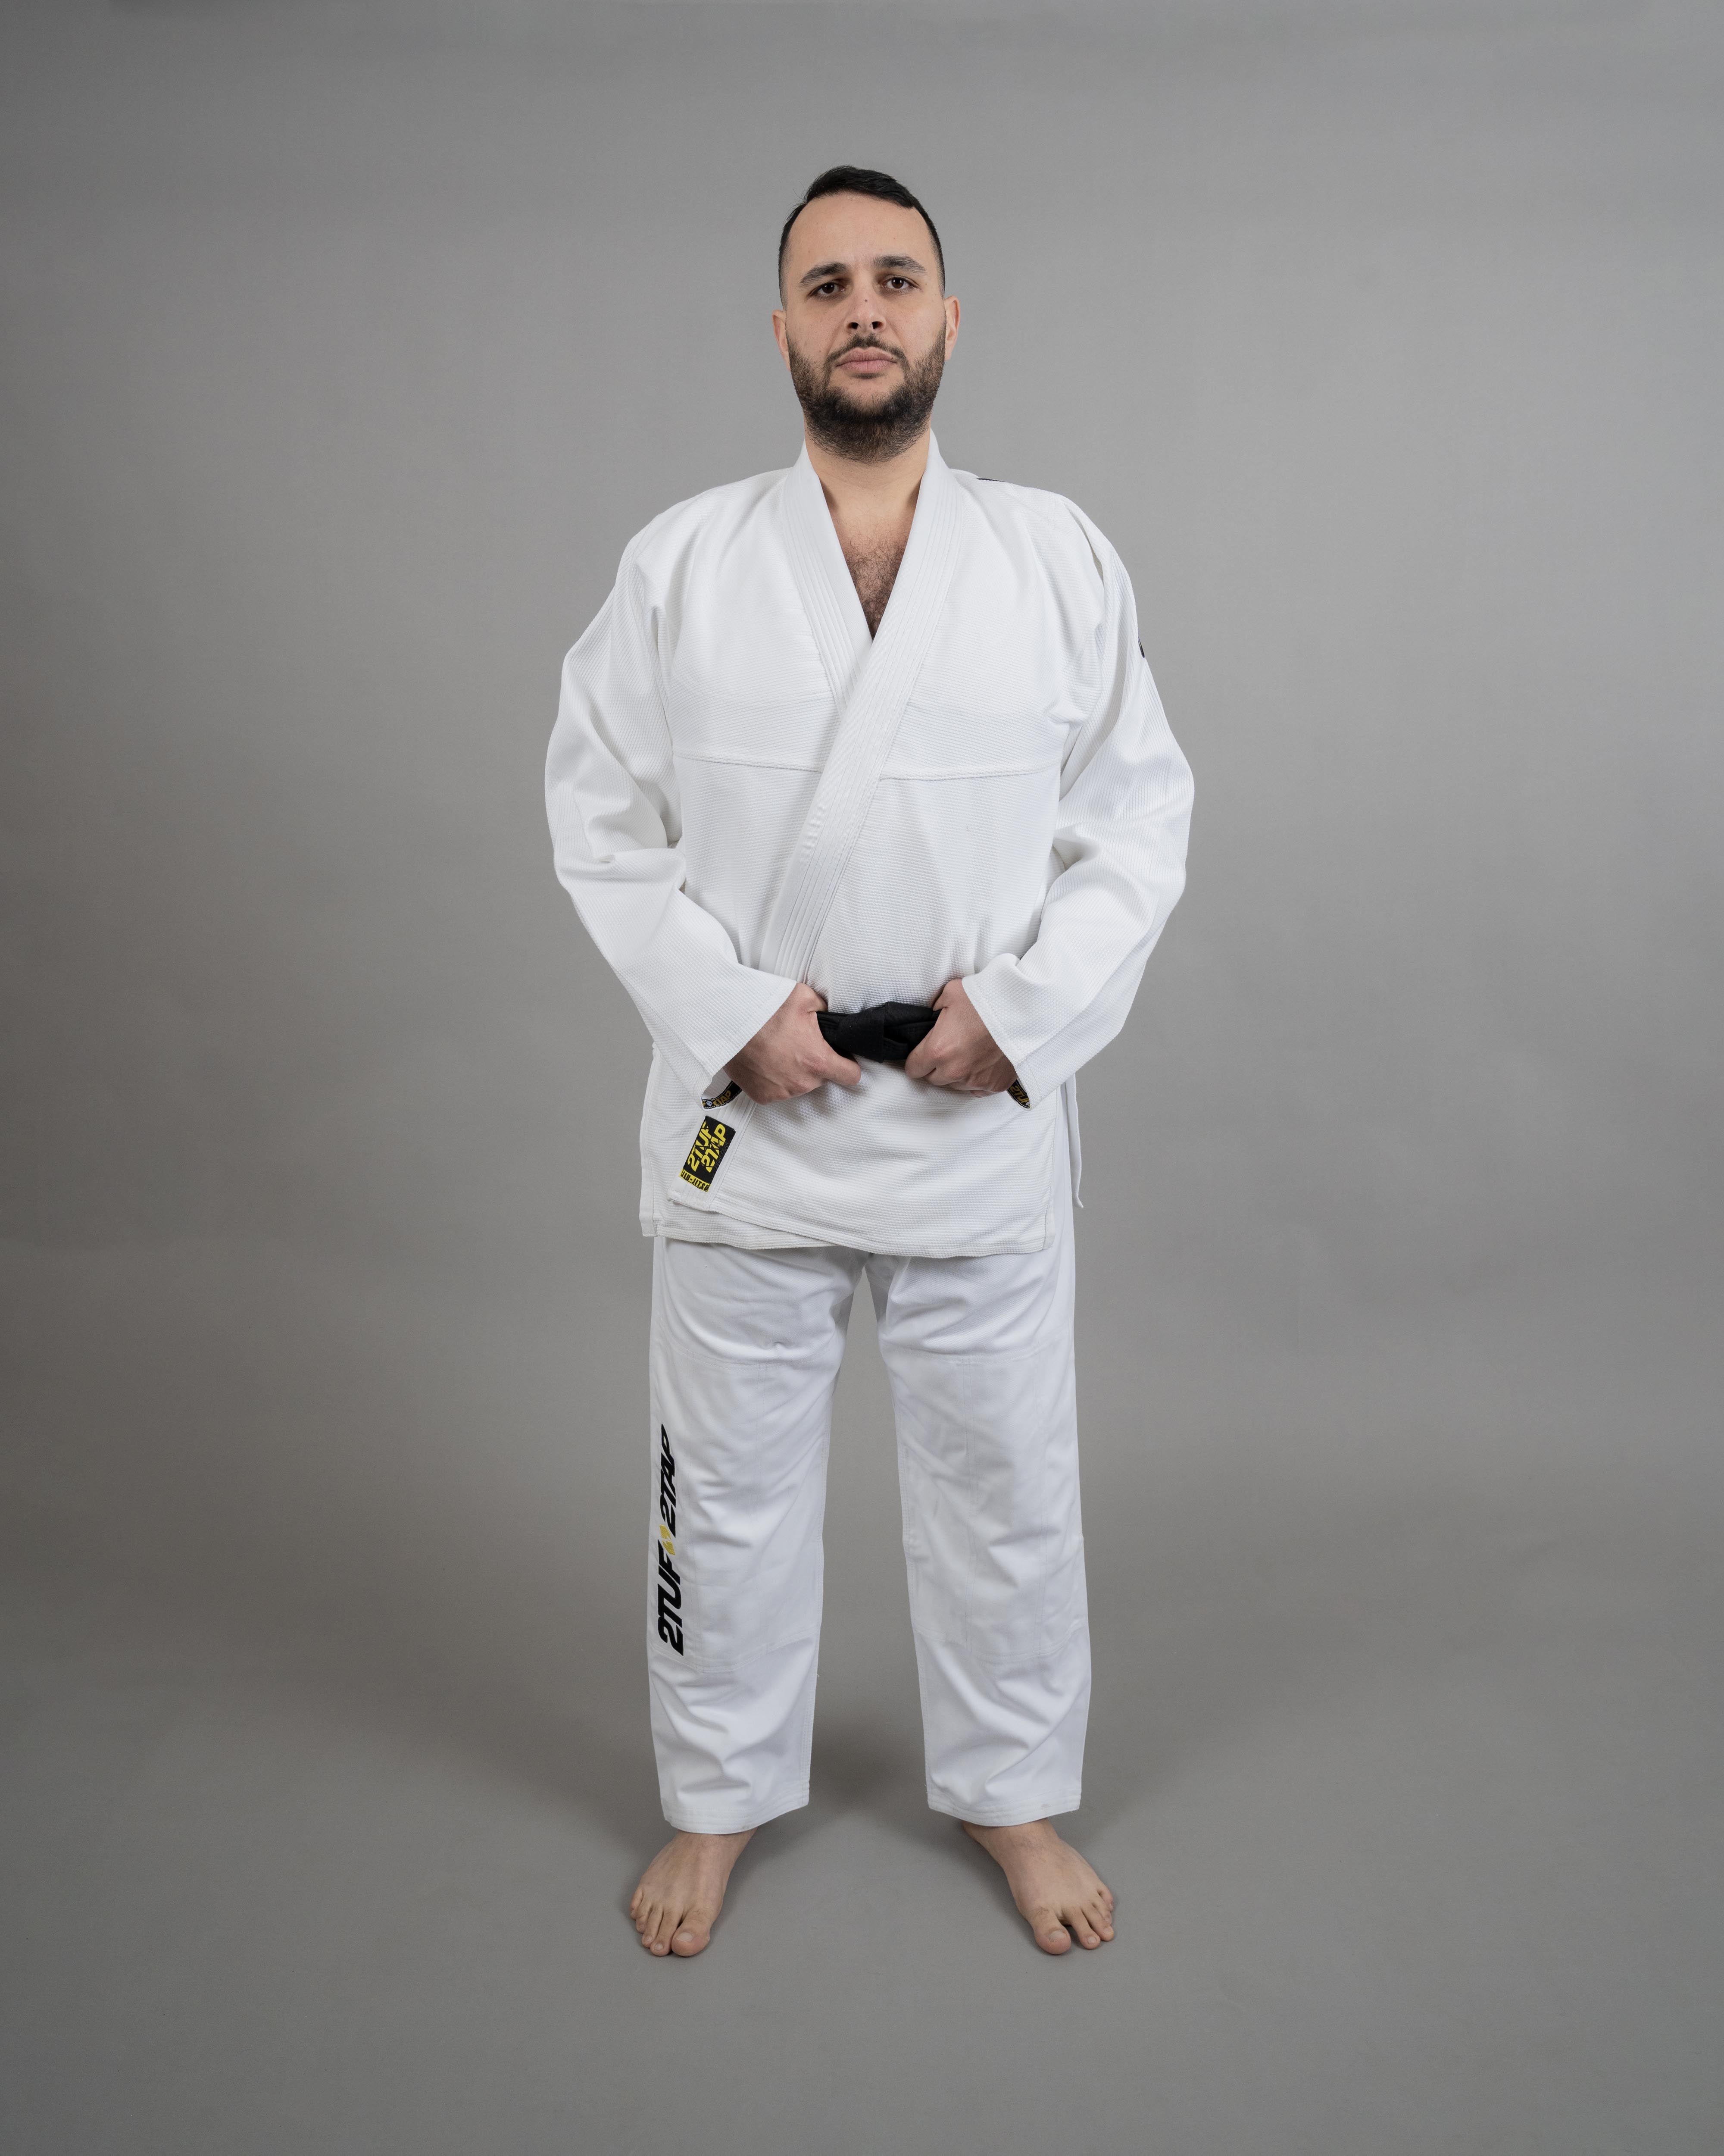 'Sweep' Jiu-Jitsu Gi Uniform - White/Yellow